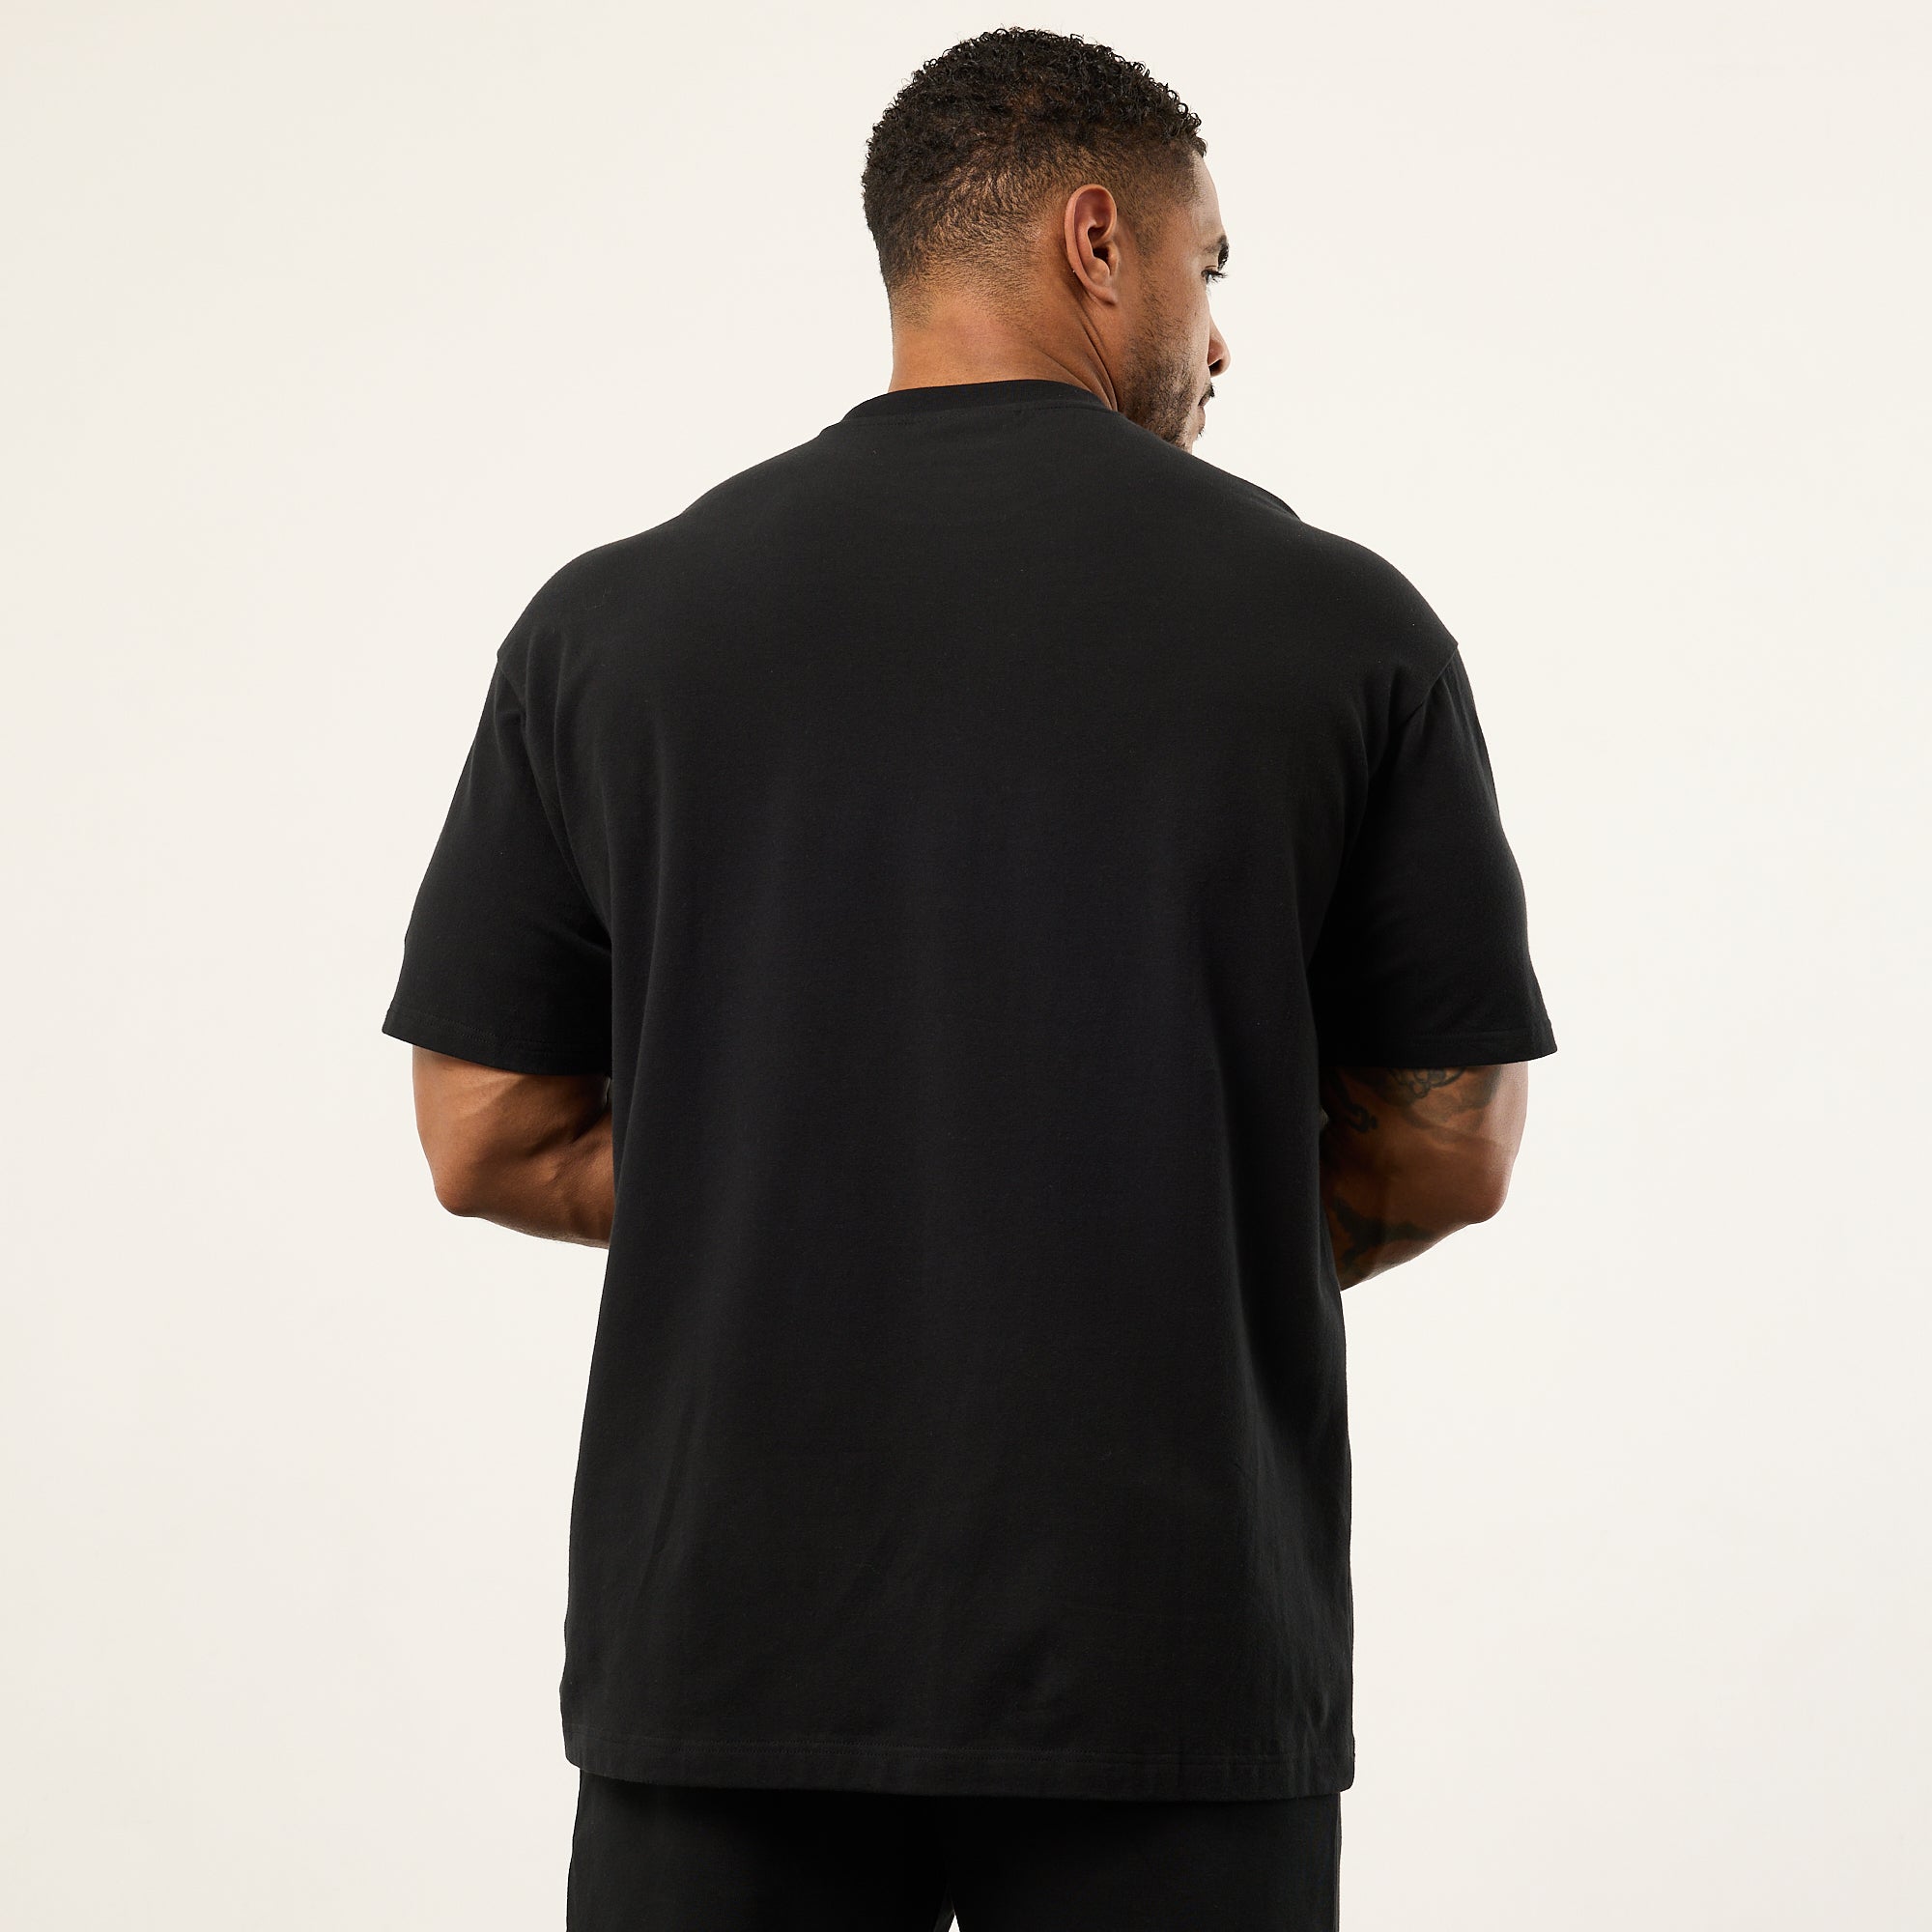 Vanquish Black Signature Oversized T Shirt